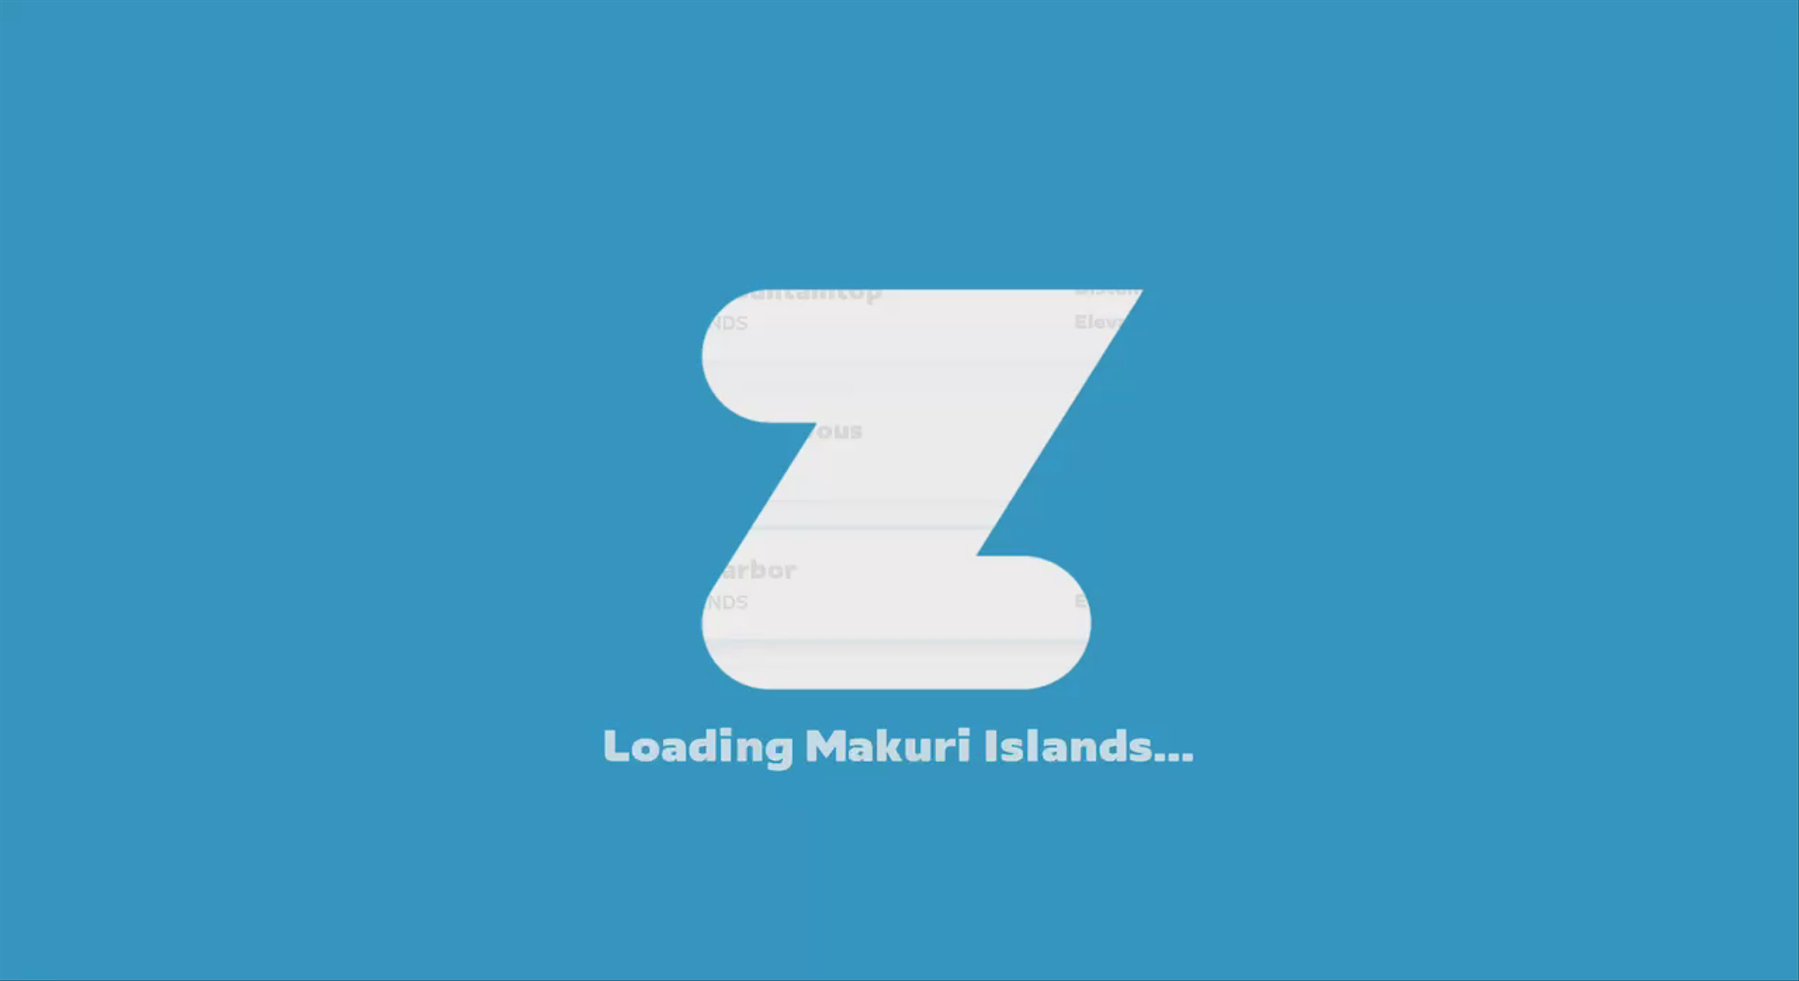 Zwift - 03. Cadence and Cruise in Makuri Islands